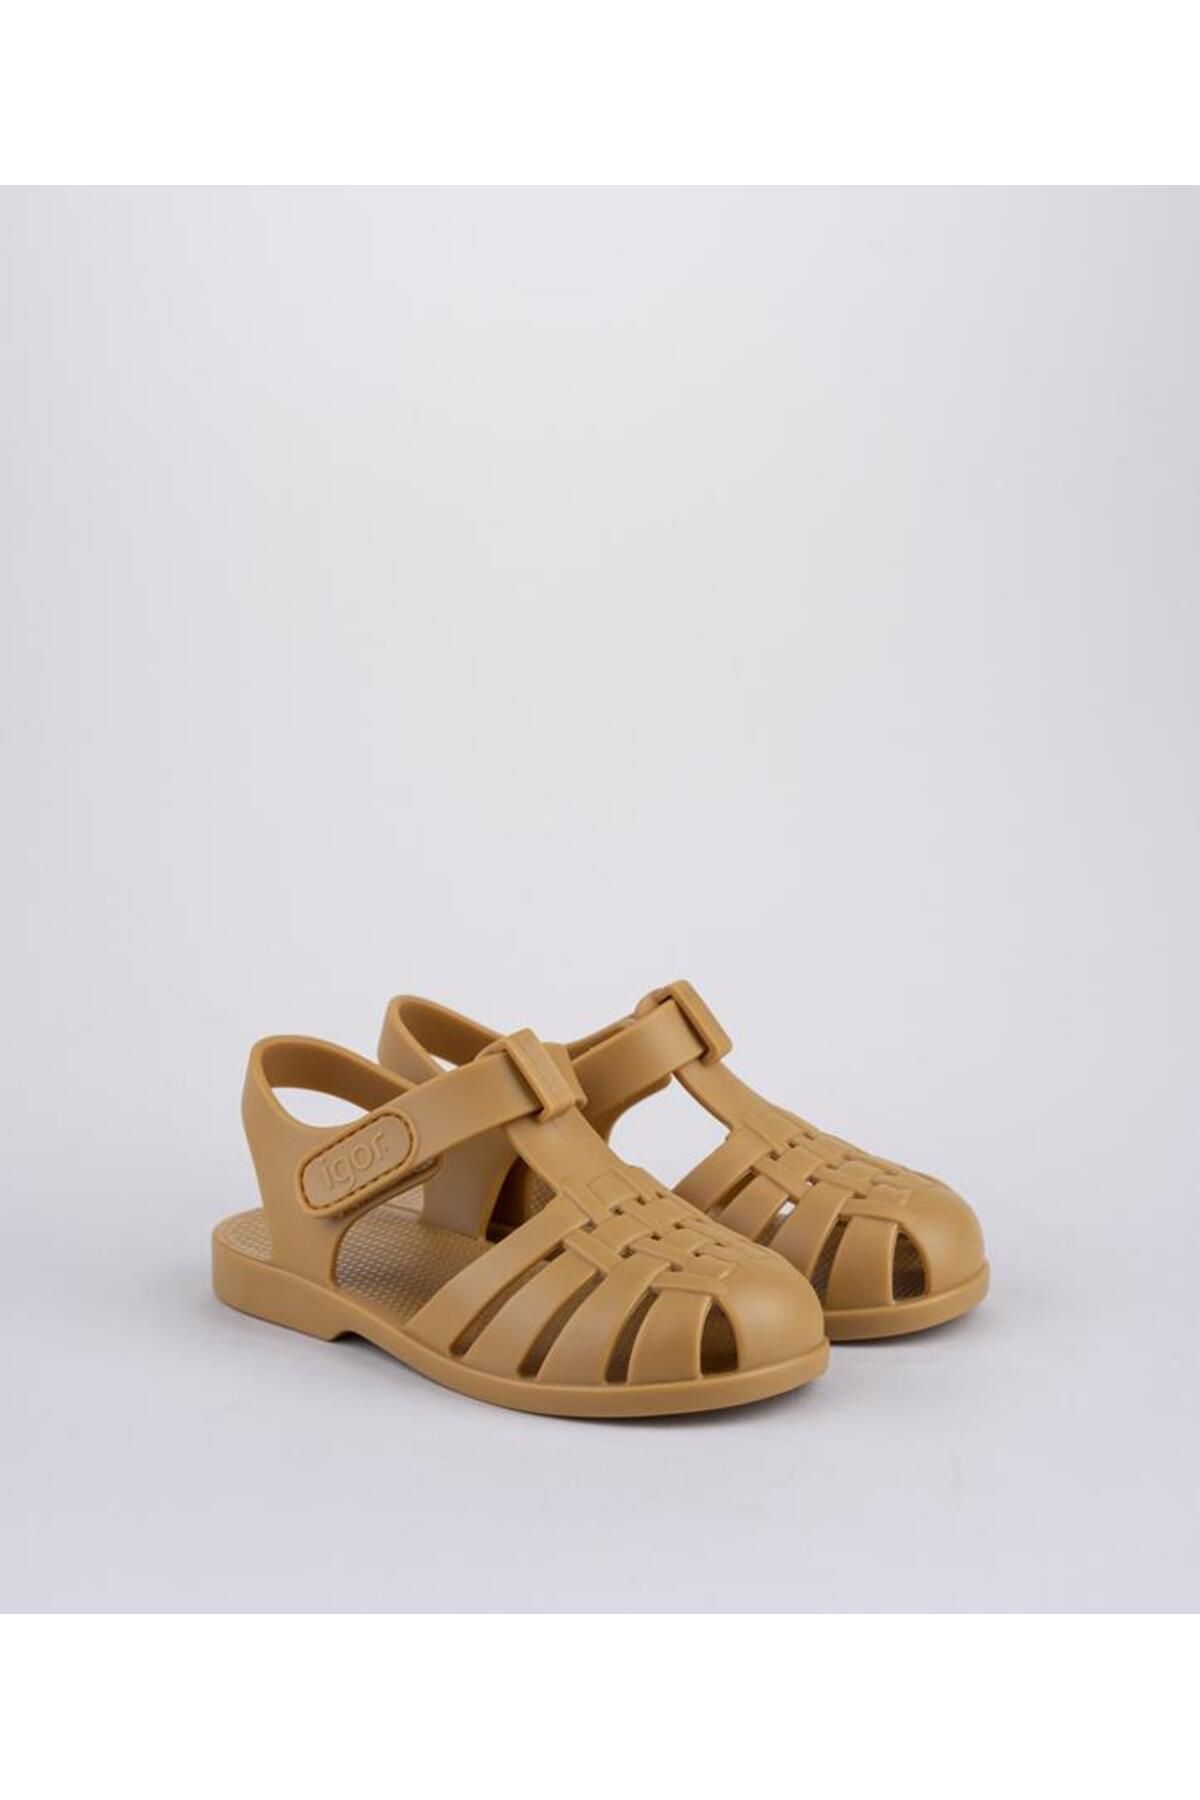 IGOR S10288 Clasa Velcro Mestaza Sandals